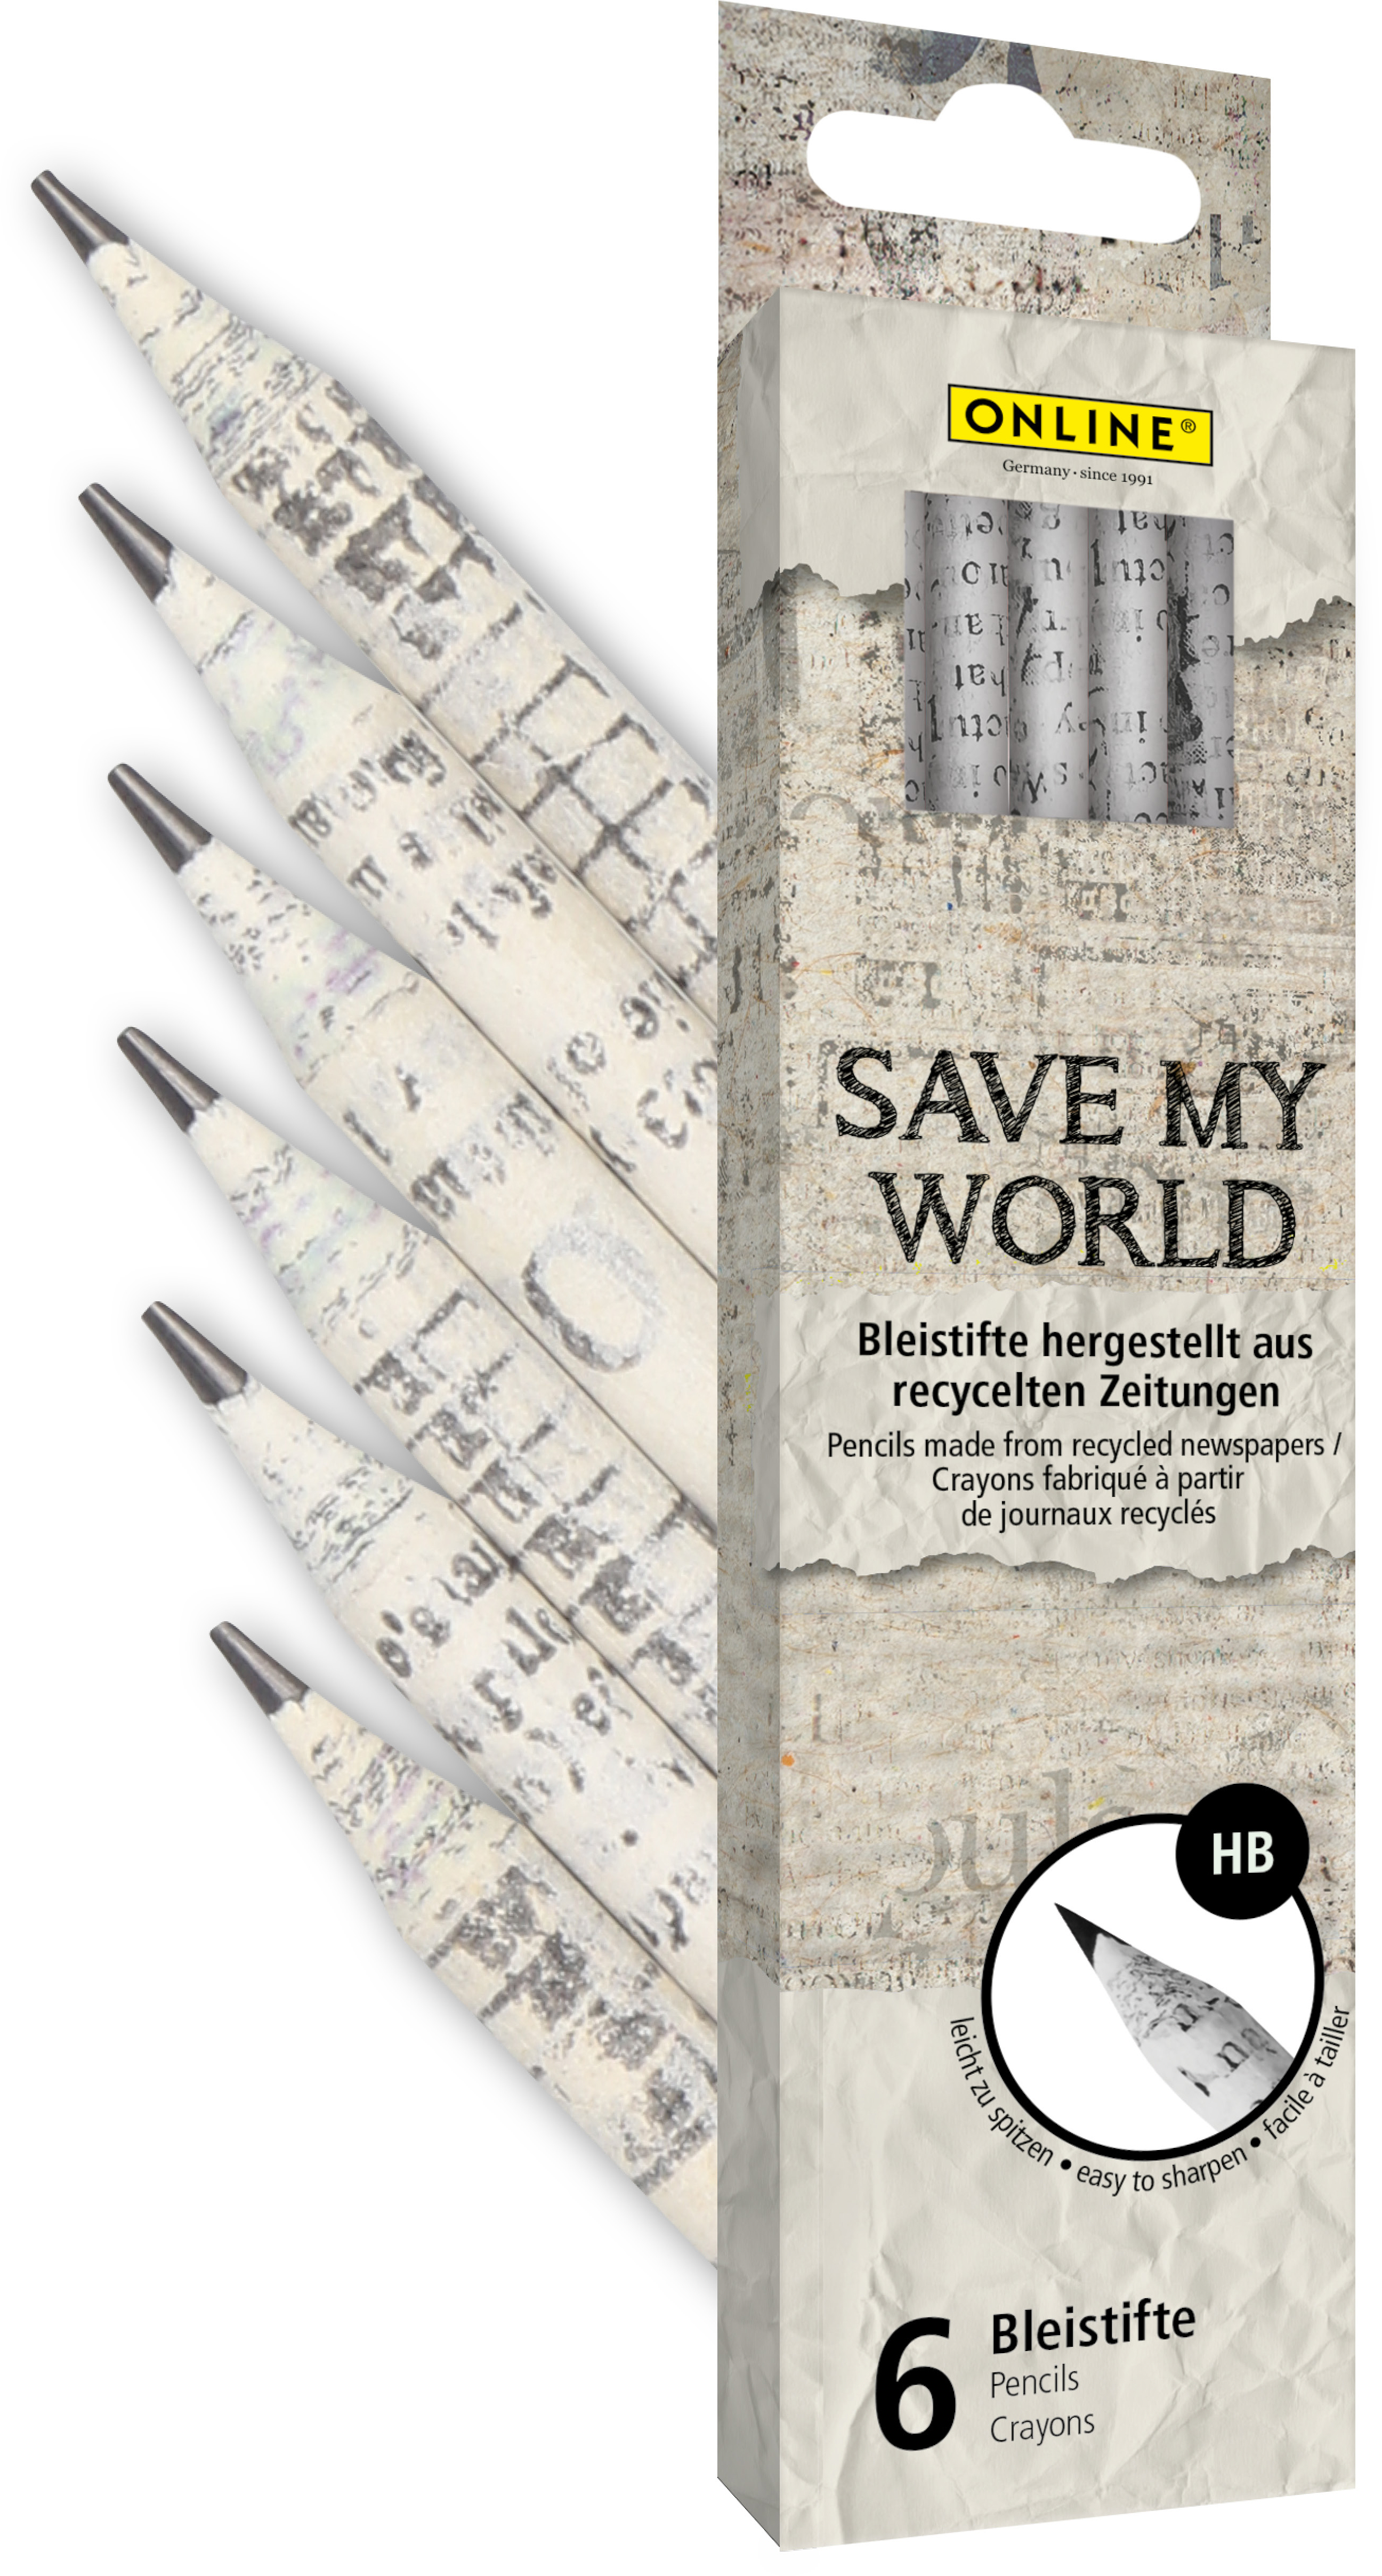 ONLINE Crayon Save My World HB 7919 6 pcs.